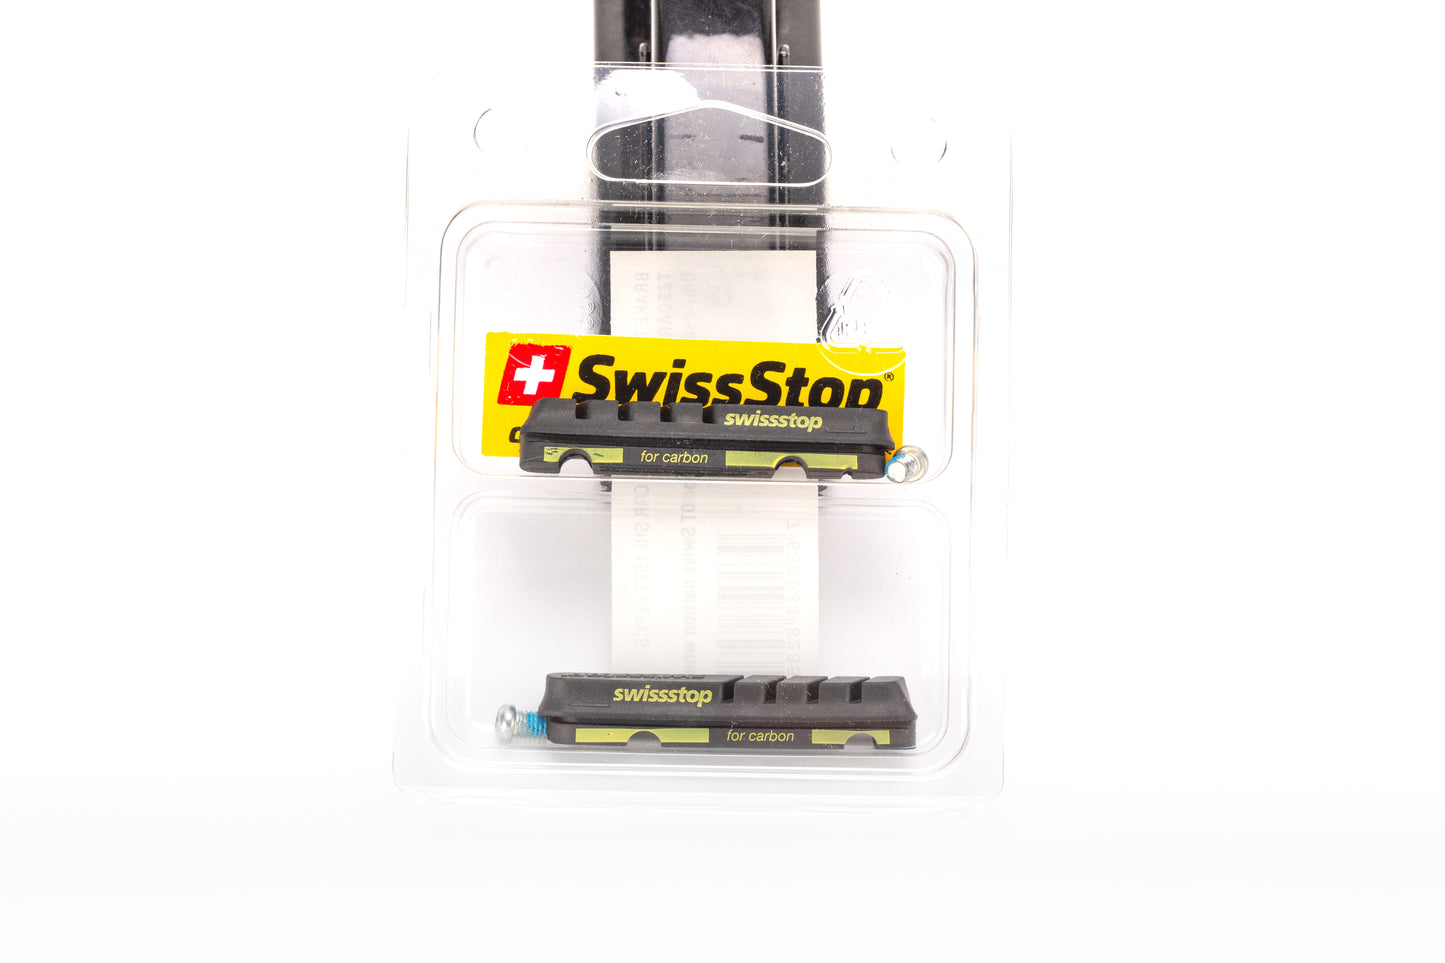 SwissStop Carbon Brake Pads (Pair) w/opkge